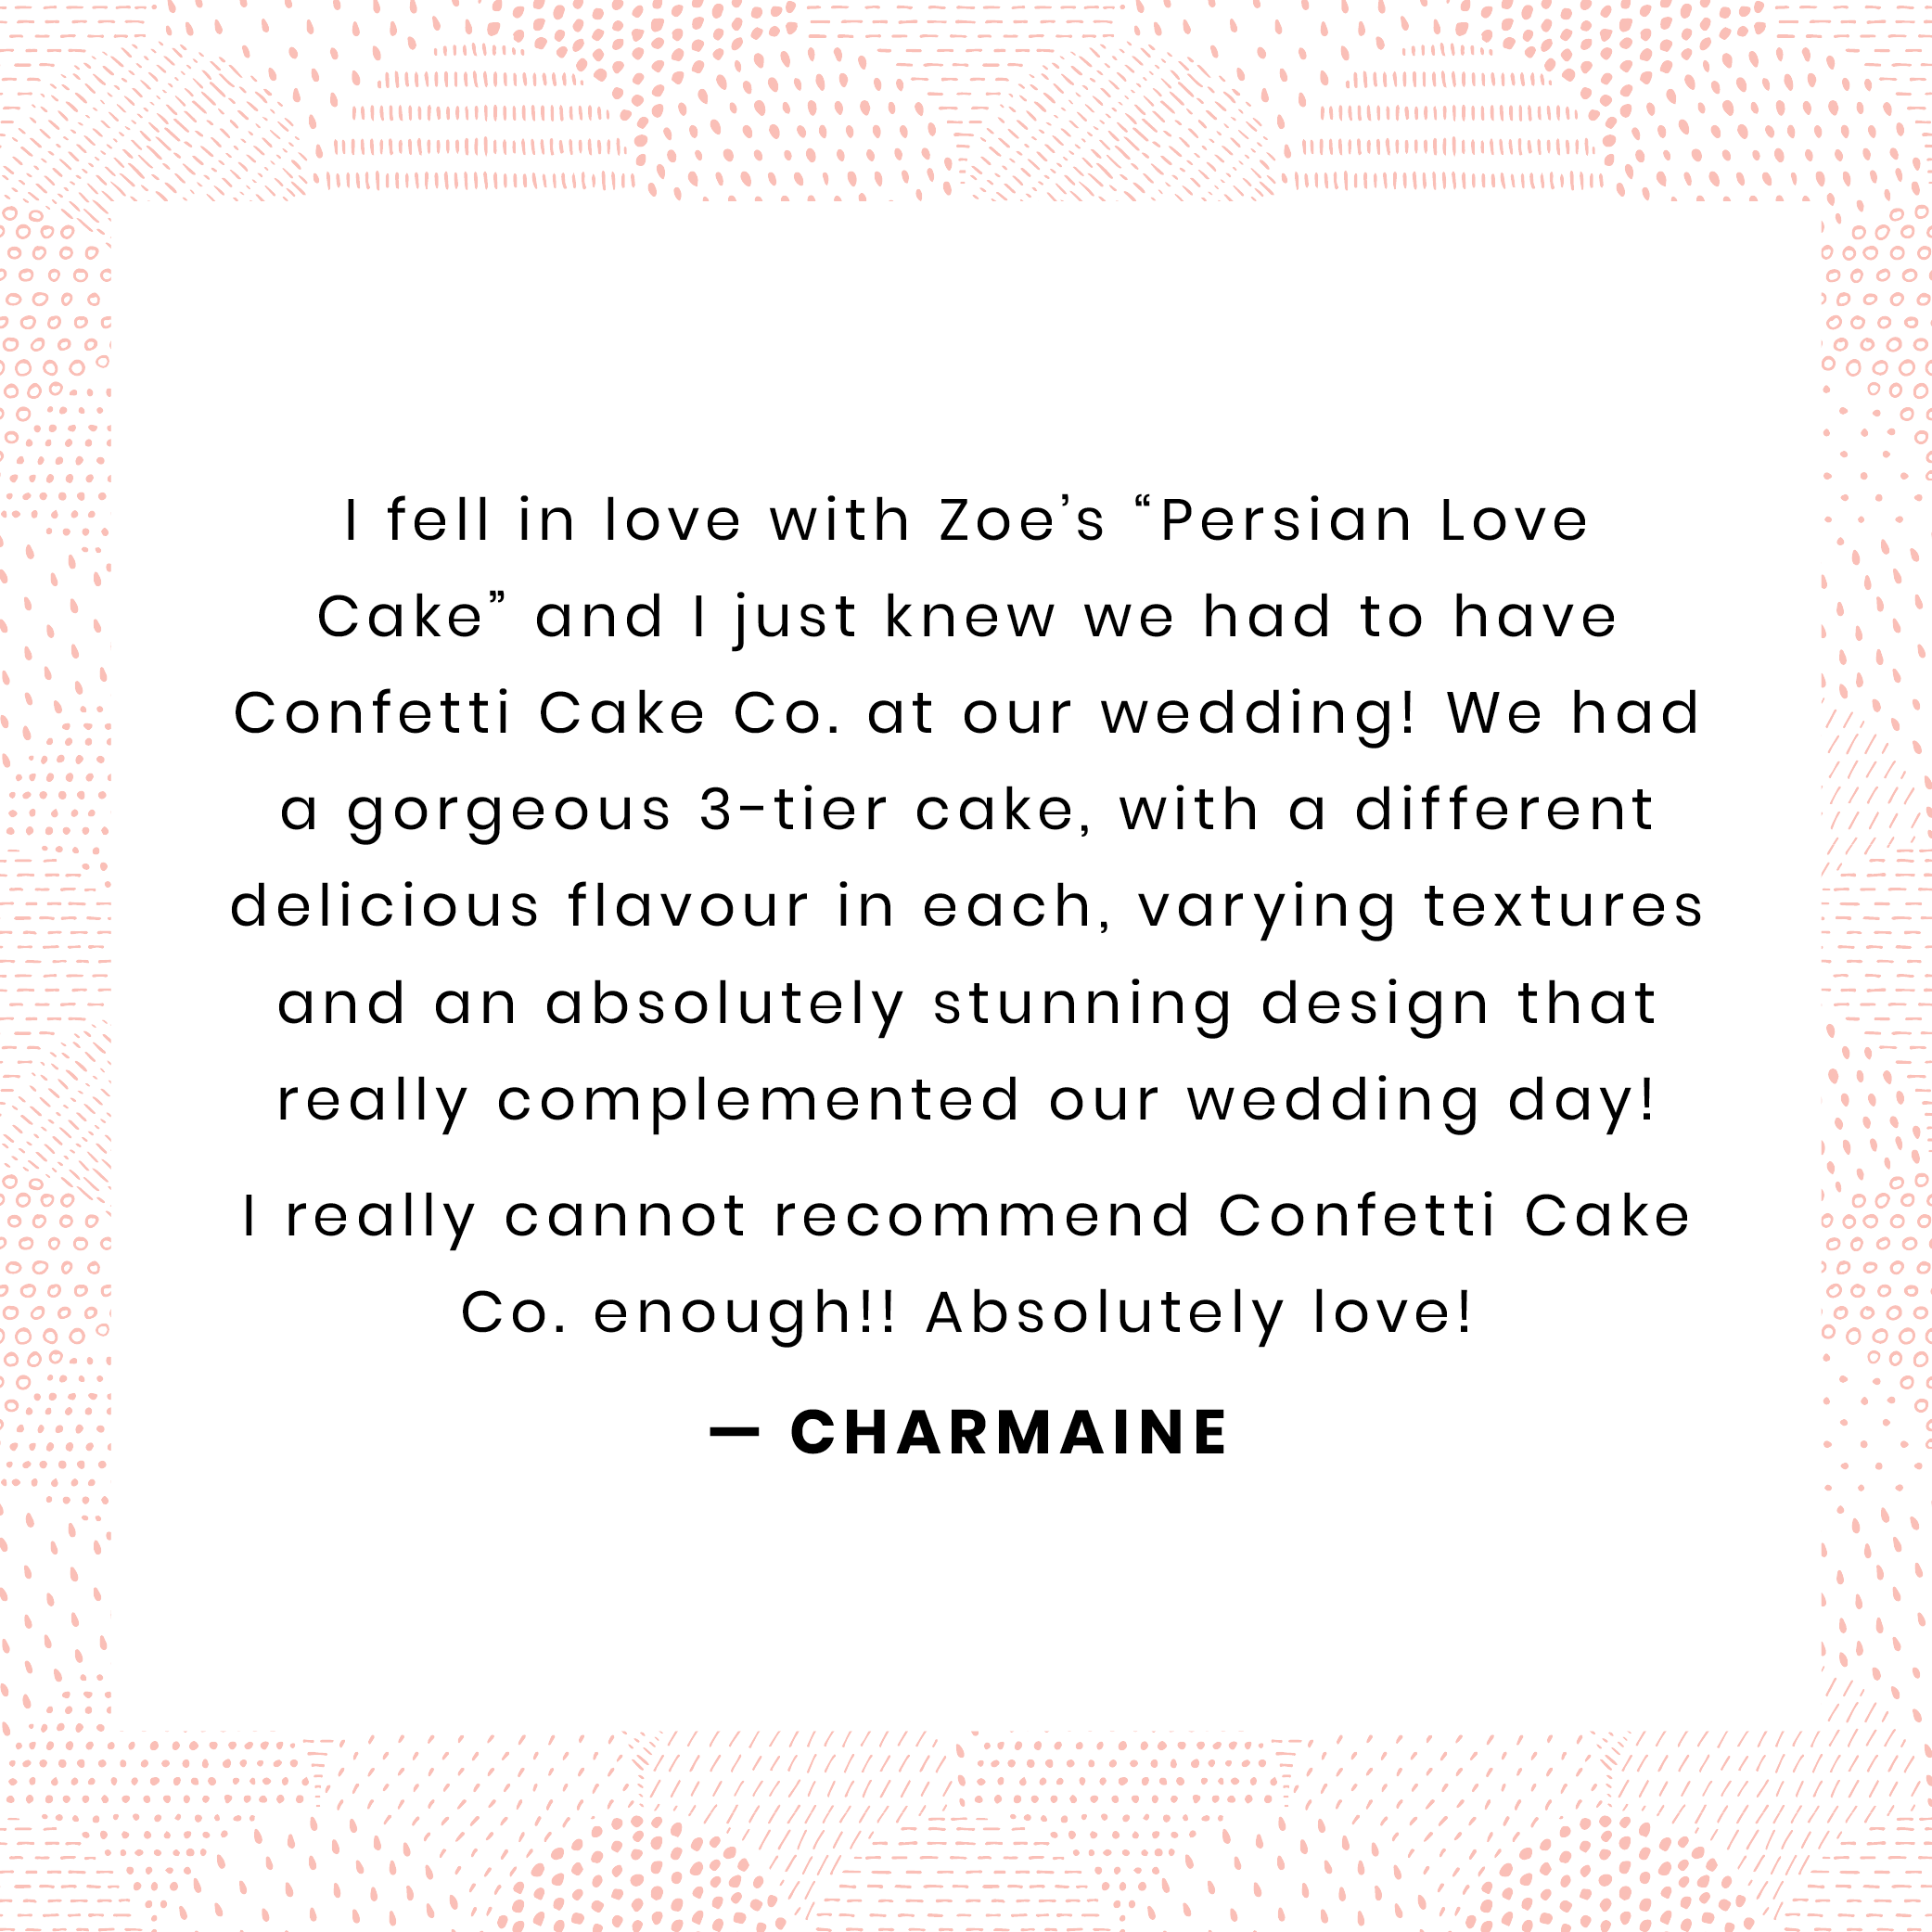 confetti-cake-co-charmaine-testimonial.png